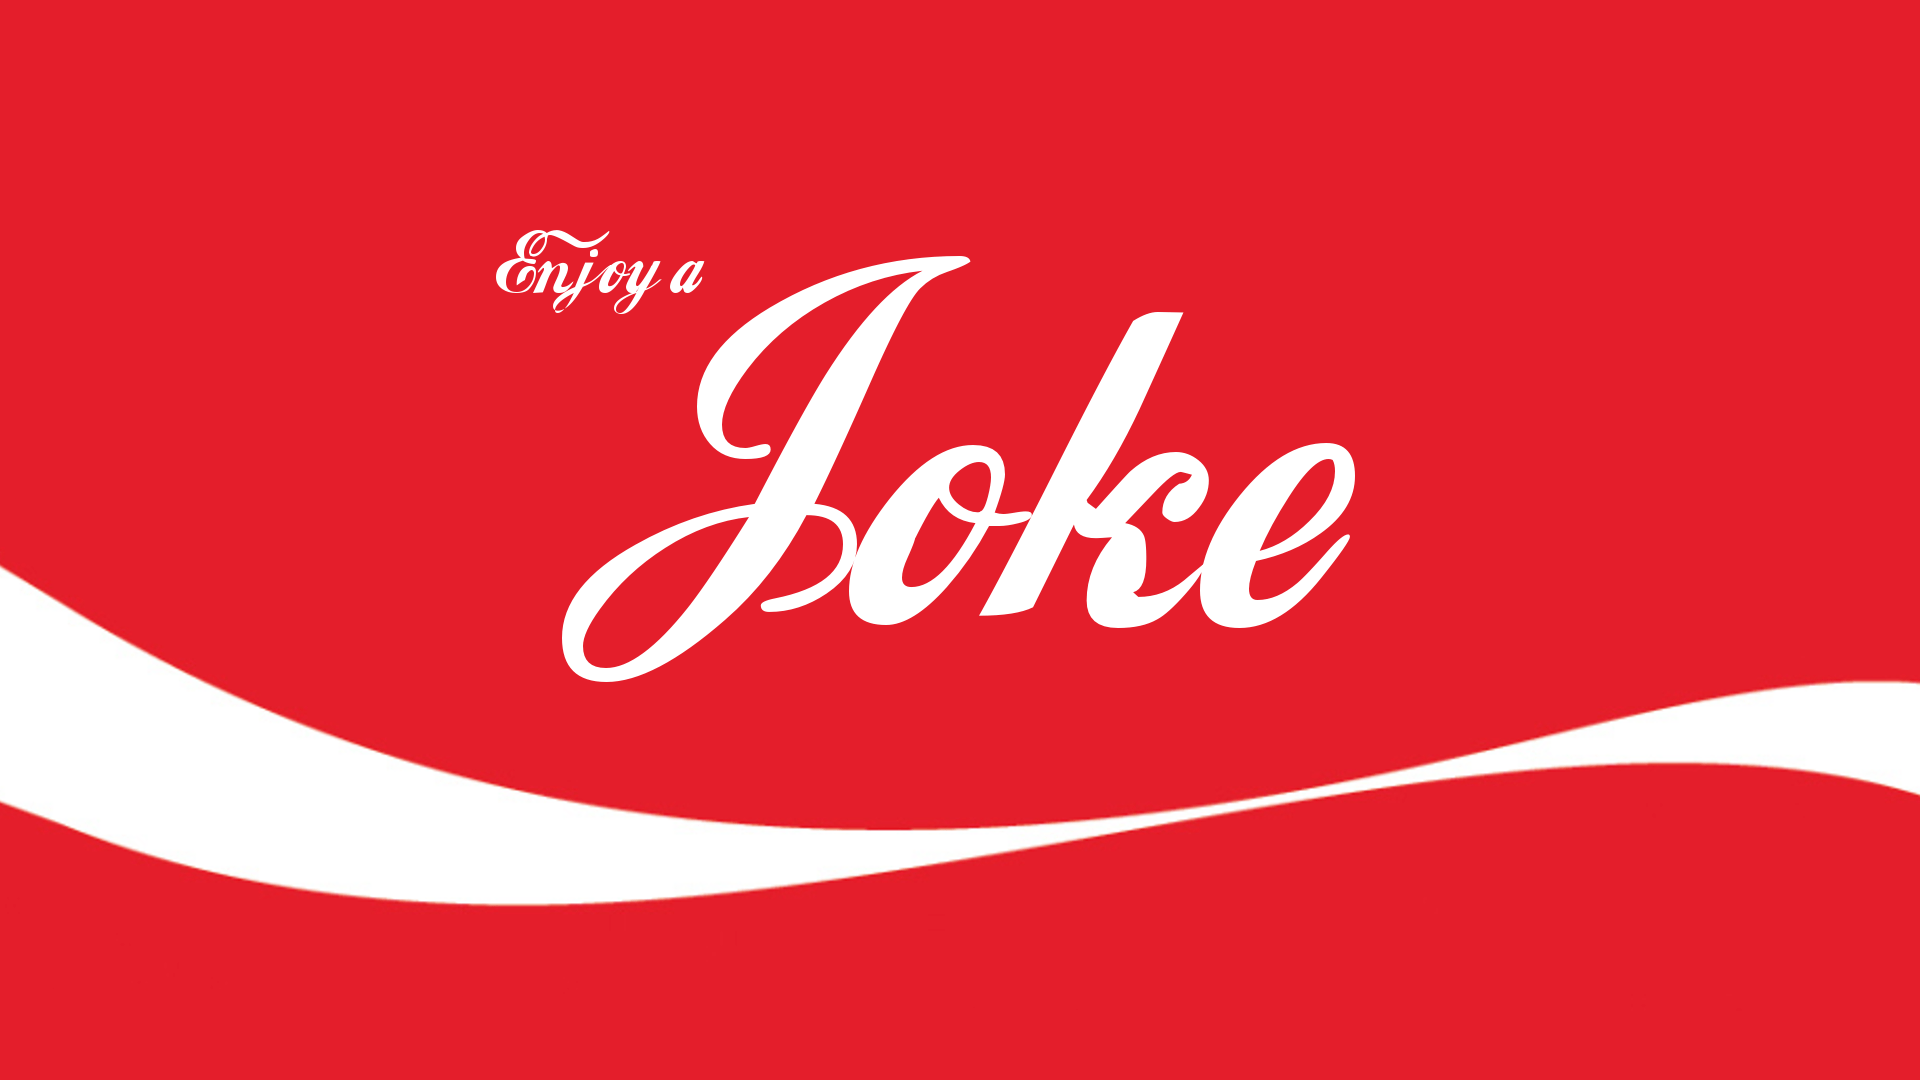 Coke Joke Wallpaper 2 / Wallpaper Funny 74542 high quality